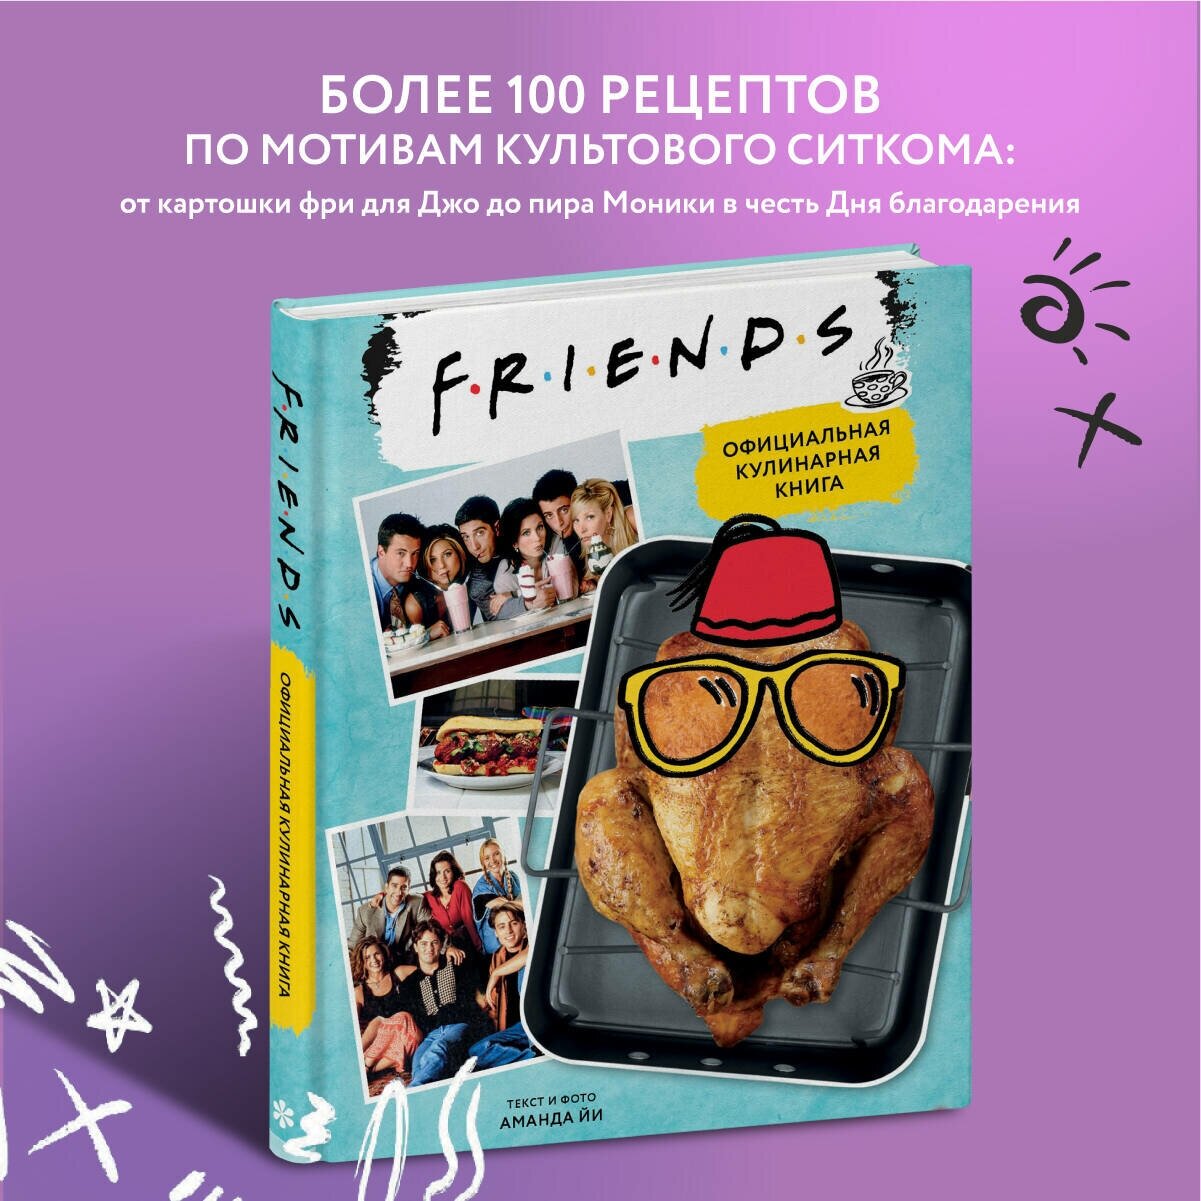 Friends. Официальная кулинарная книга - фото №7